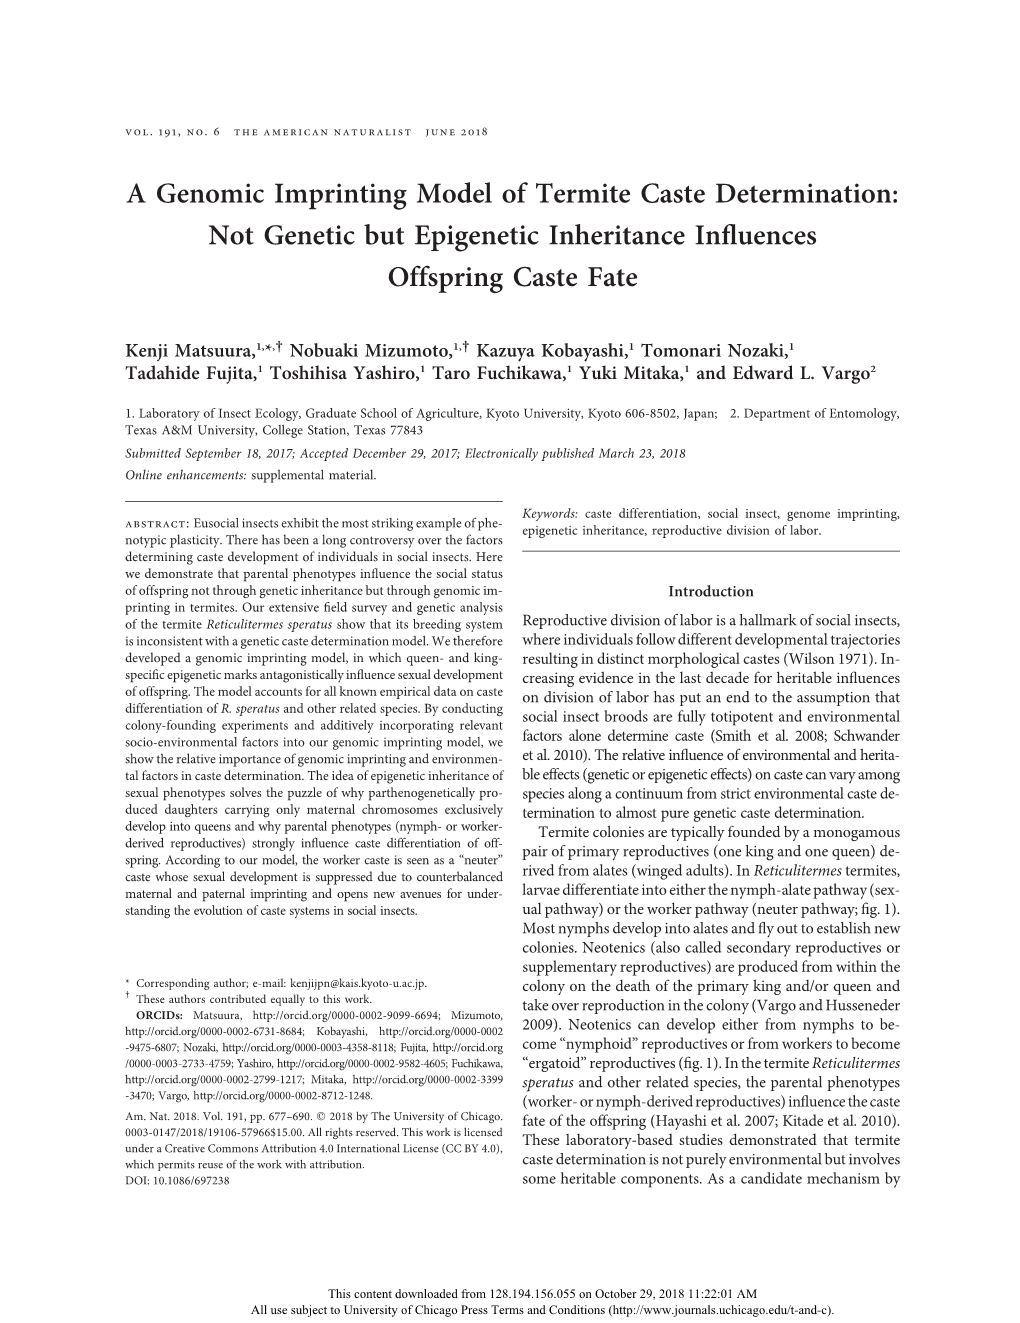 A Genomic Imprinting Model of Termite Caste Determination: Not Genetic but Epigenetic Inheritance Inﬂuences Offspring Caste Fate